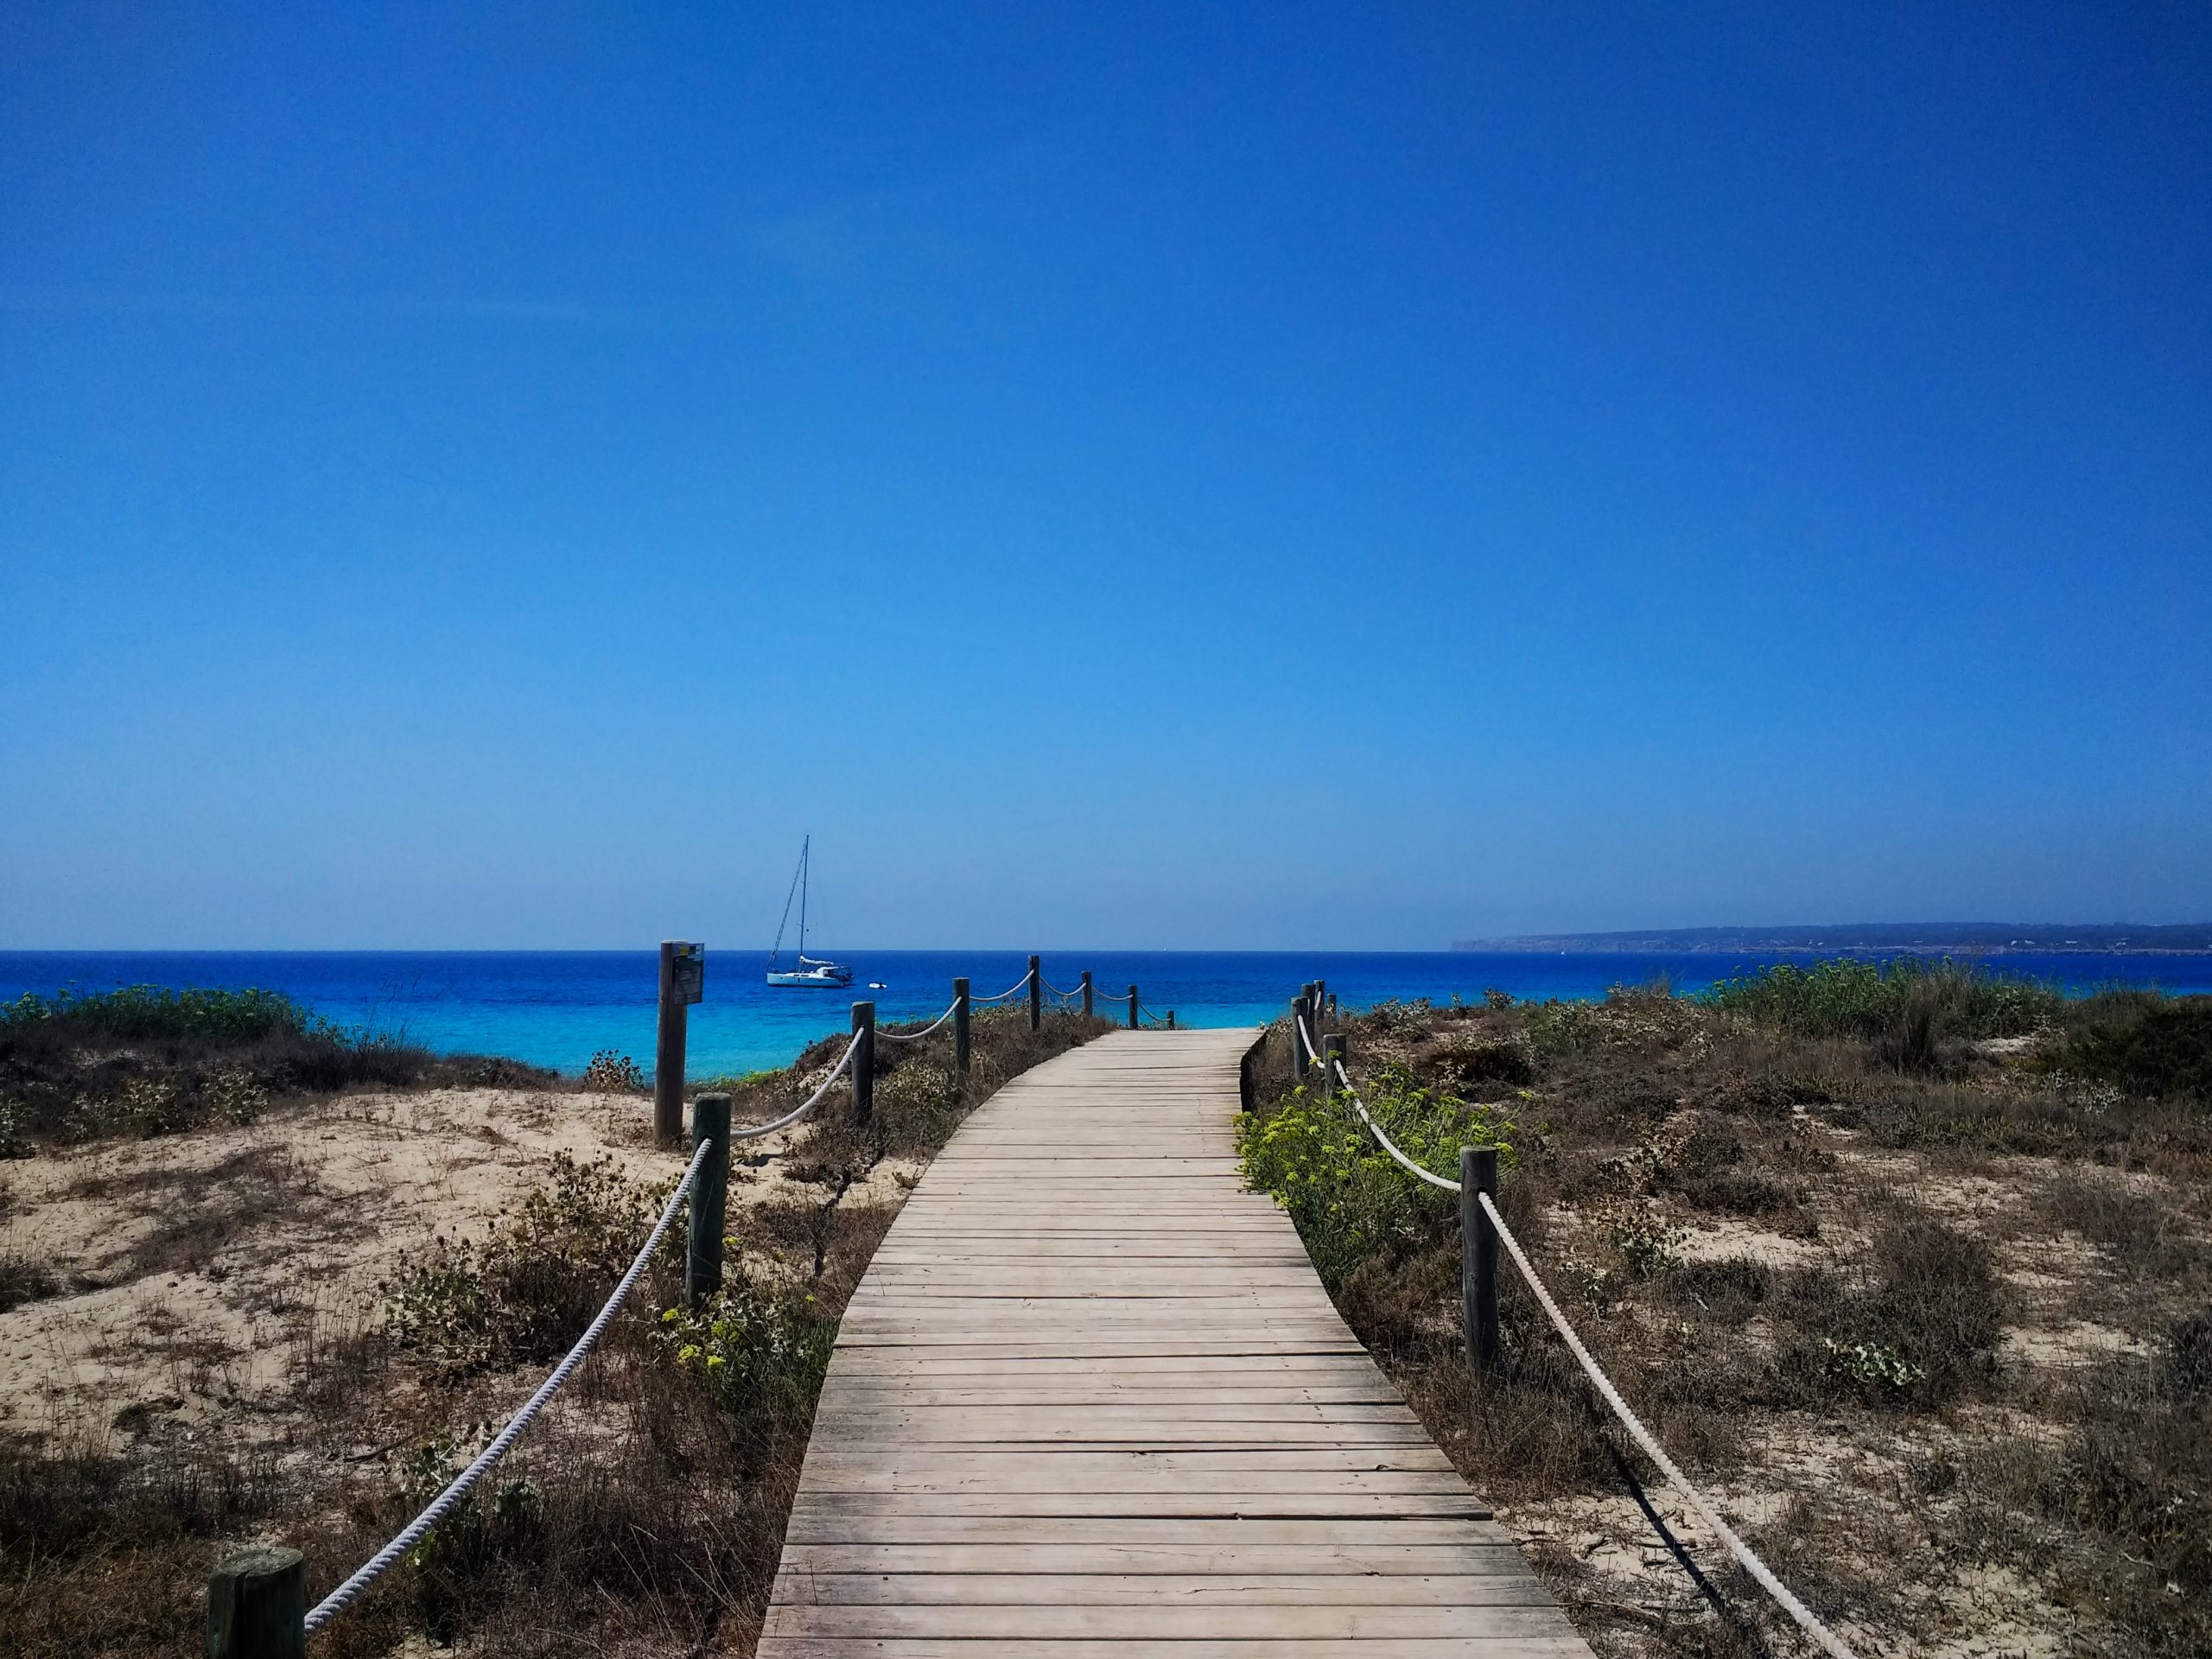 Beautiful shot of the boardwalk next to a beach in Formentera, Spain